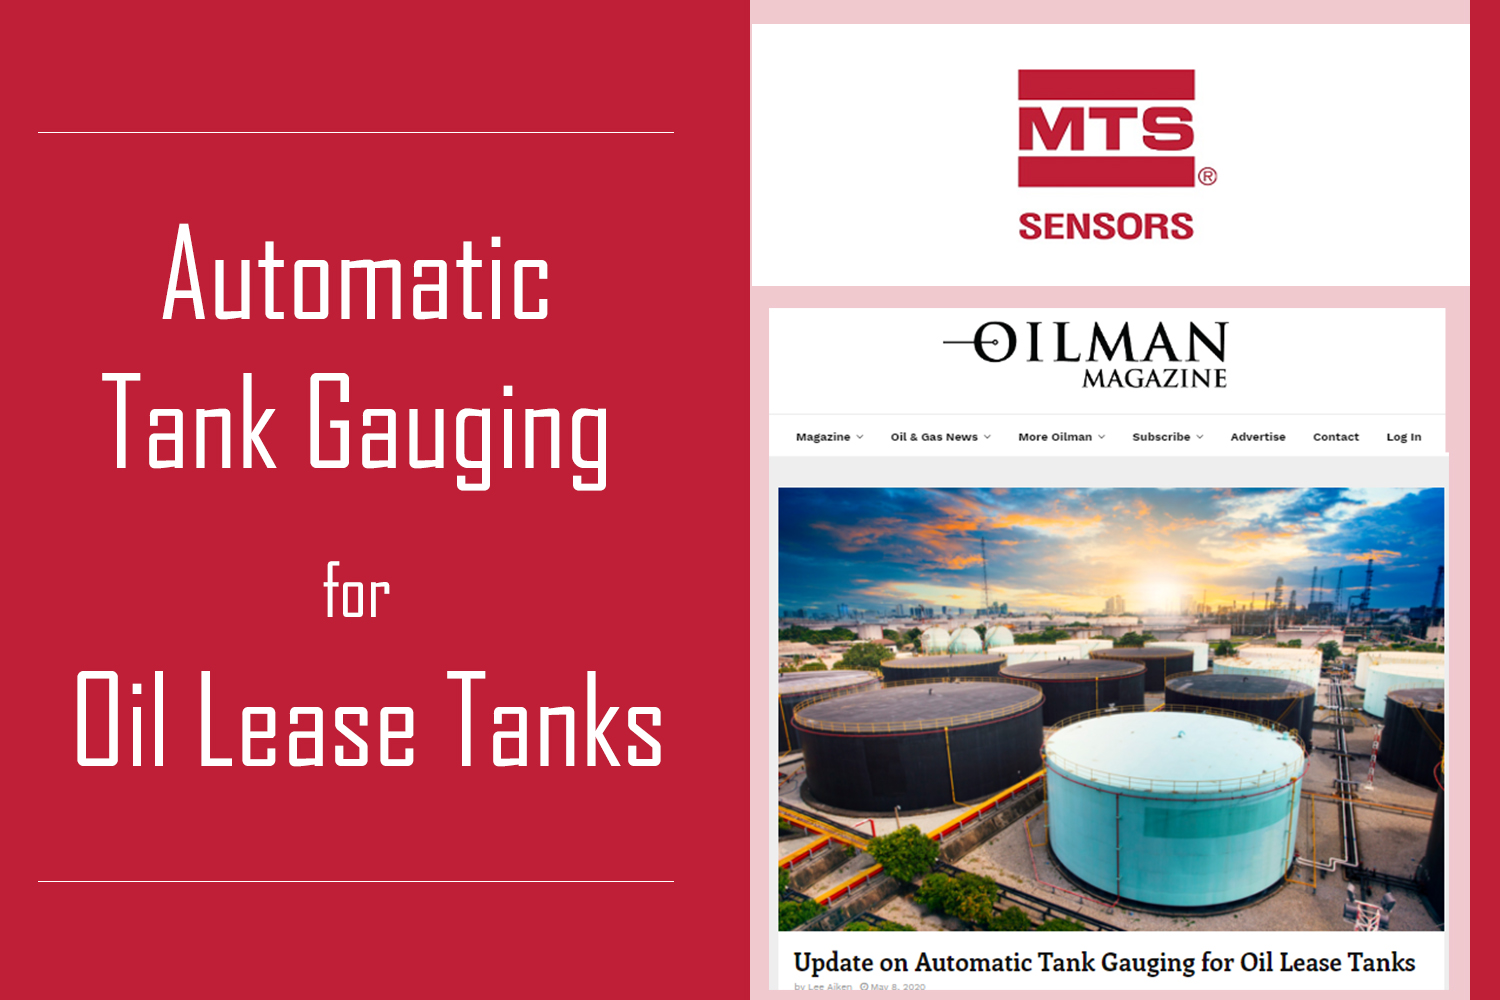 MTS Sensors article in OILMAN Magazine